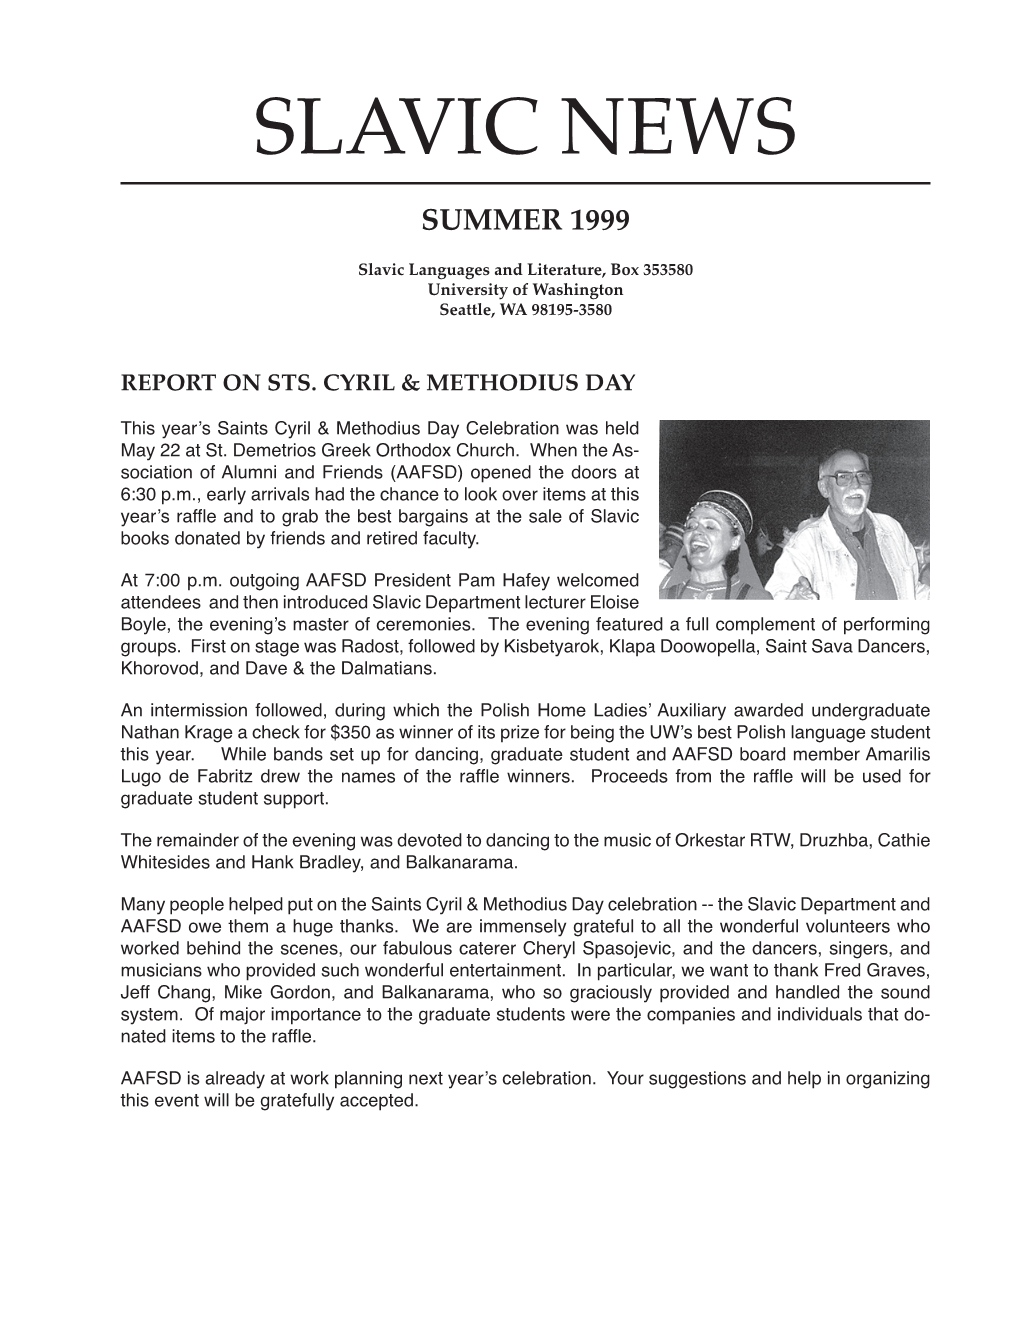 Summer 1999 Newsletter (PDF)